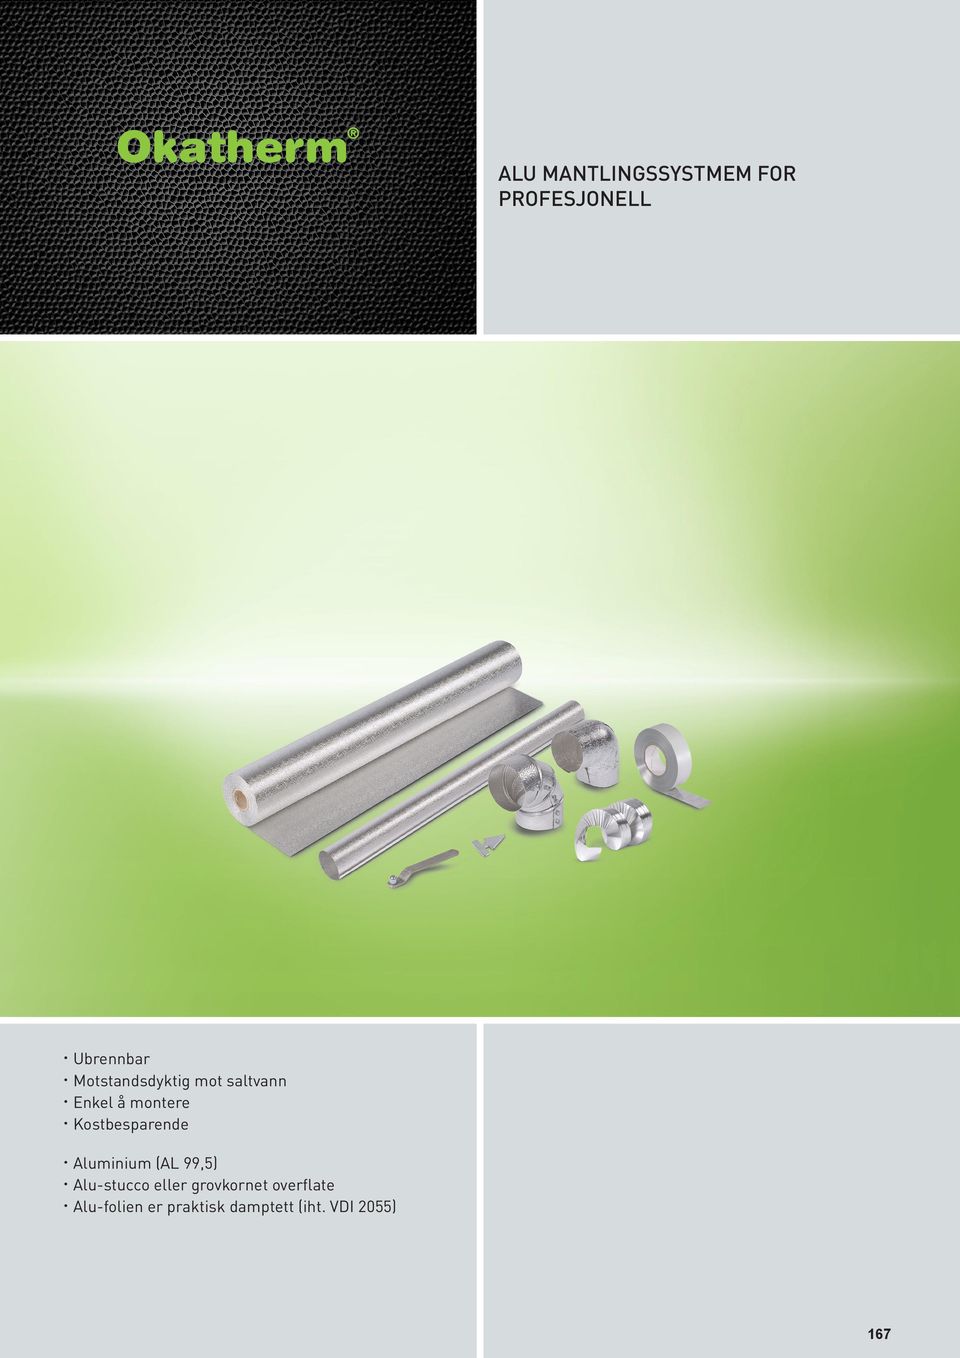 Kostbesparende Aluminium (AL 99,5) Alu-stucco eller grovkornet